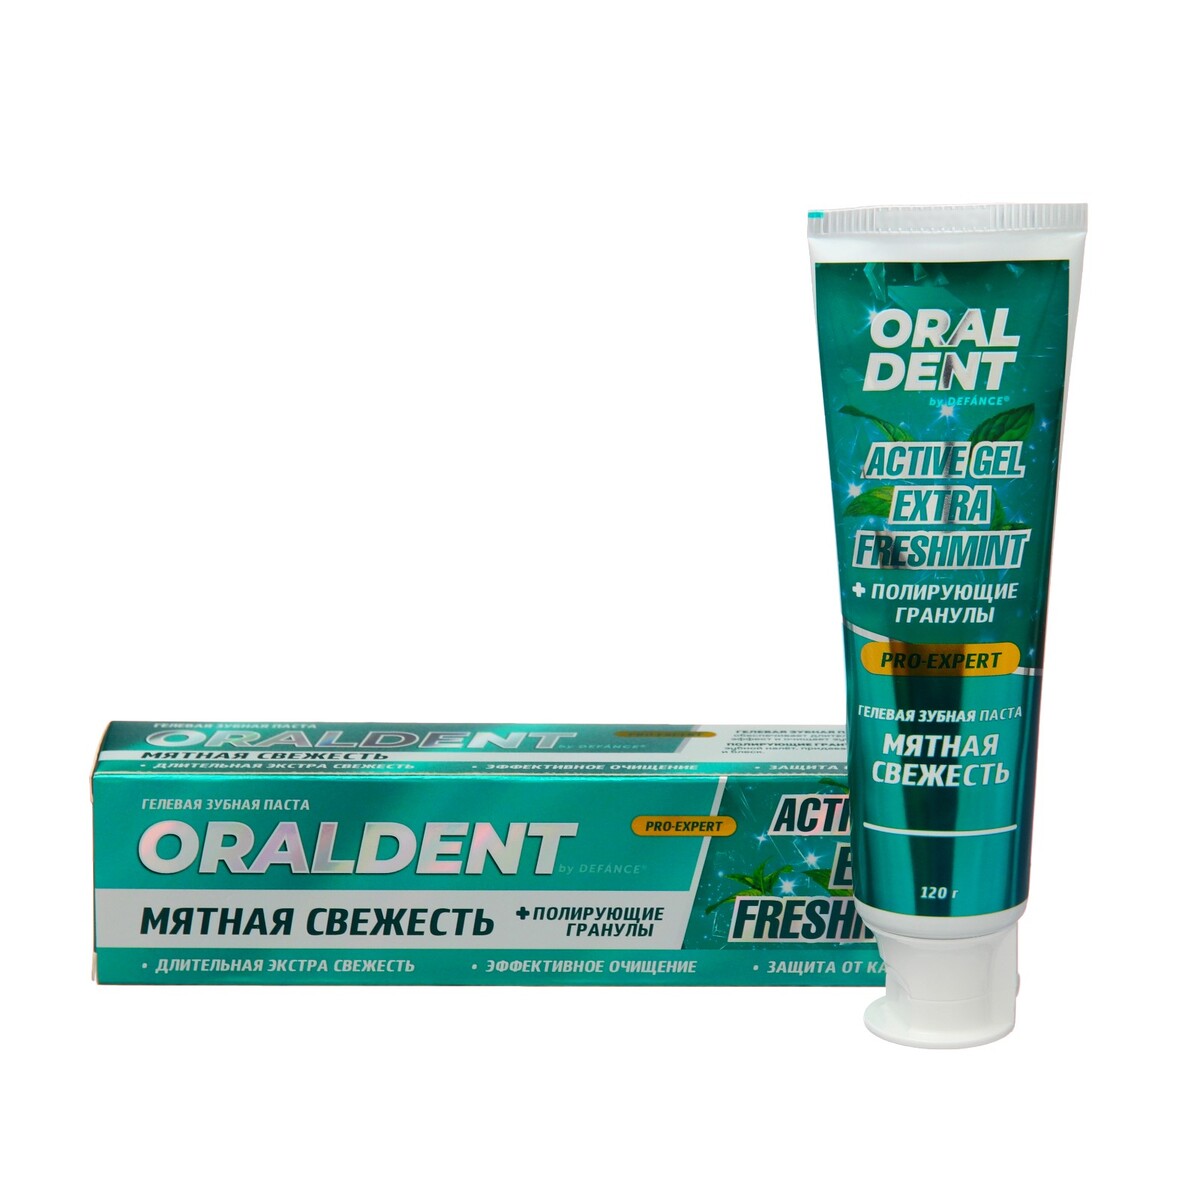 Зубная паста defance oraldent active gel extra freshmint, 120 г